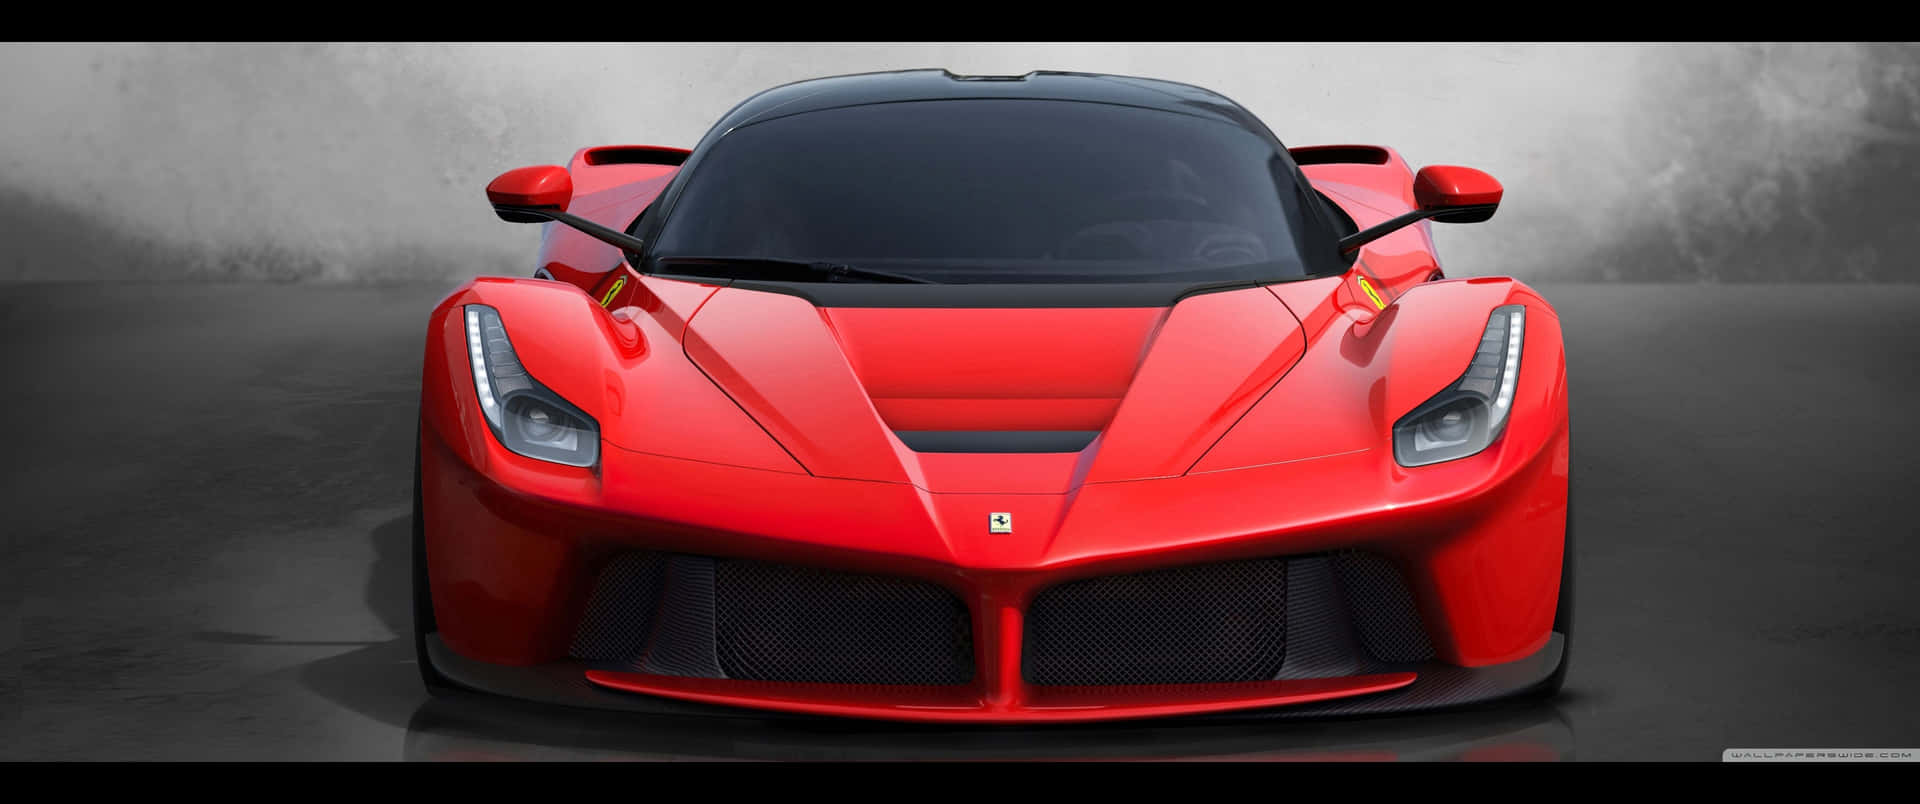 An Awe-Inspiring Look at Ferrari's Luxury Sports Car